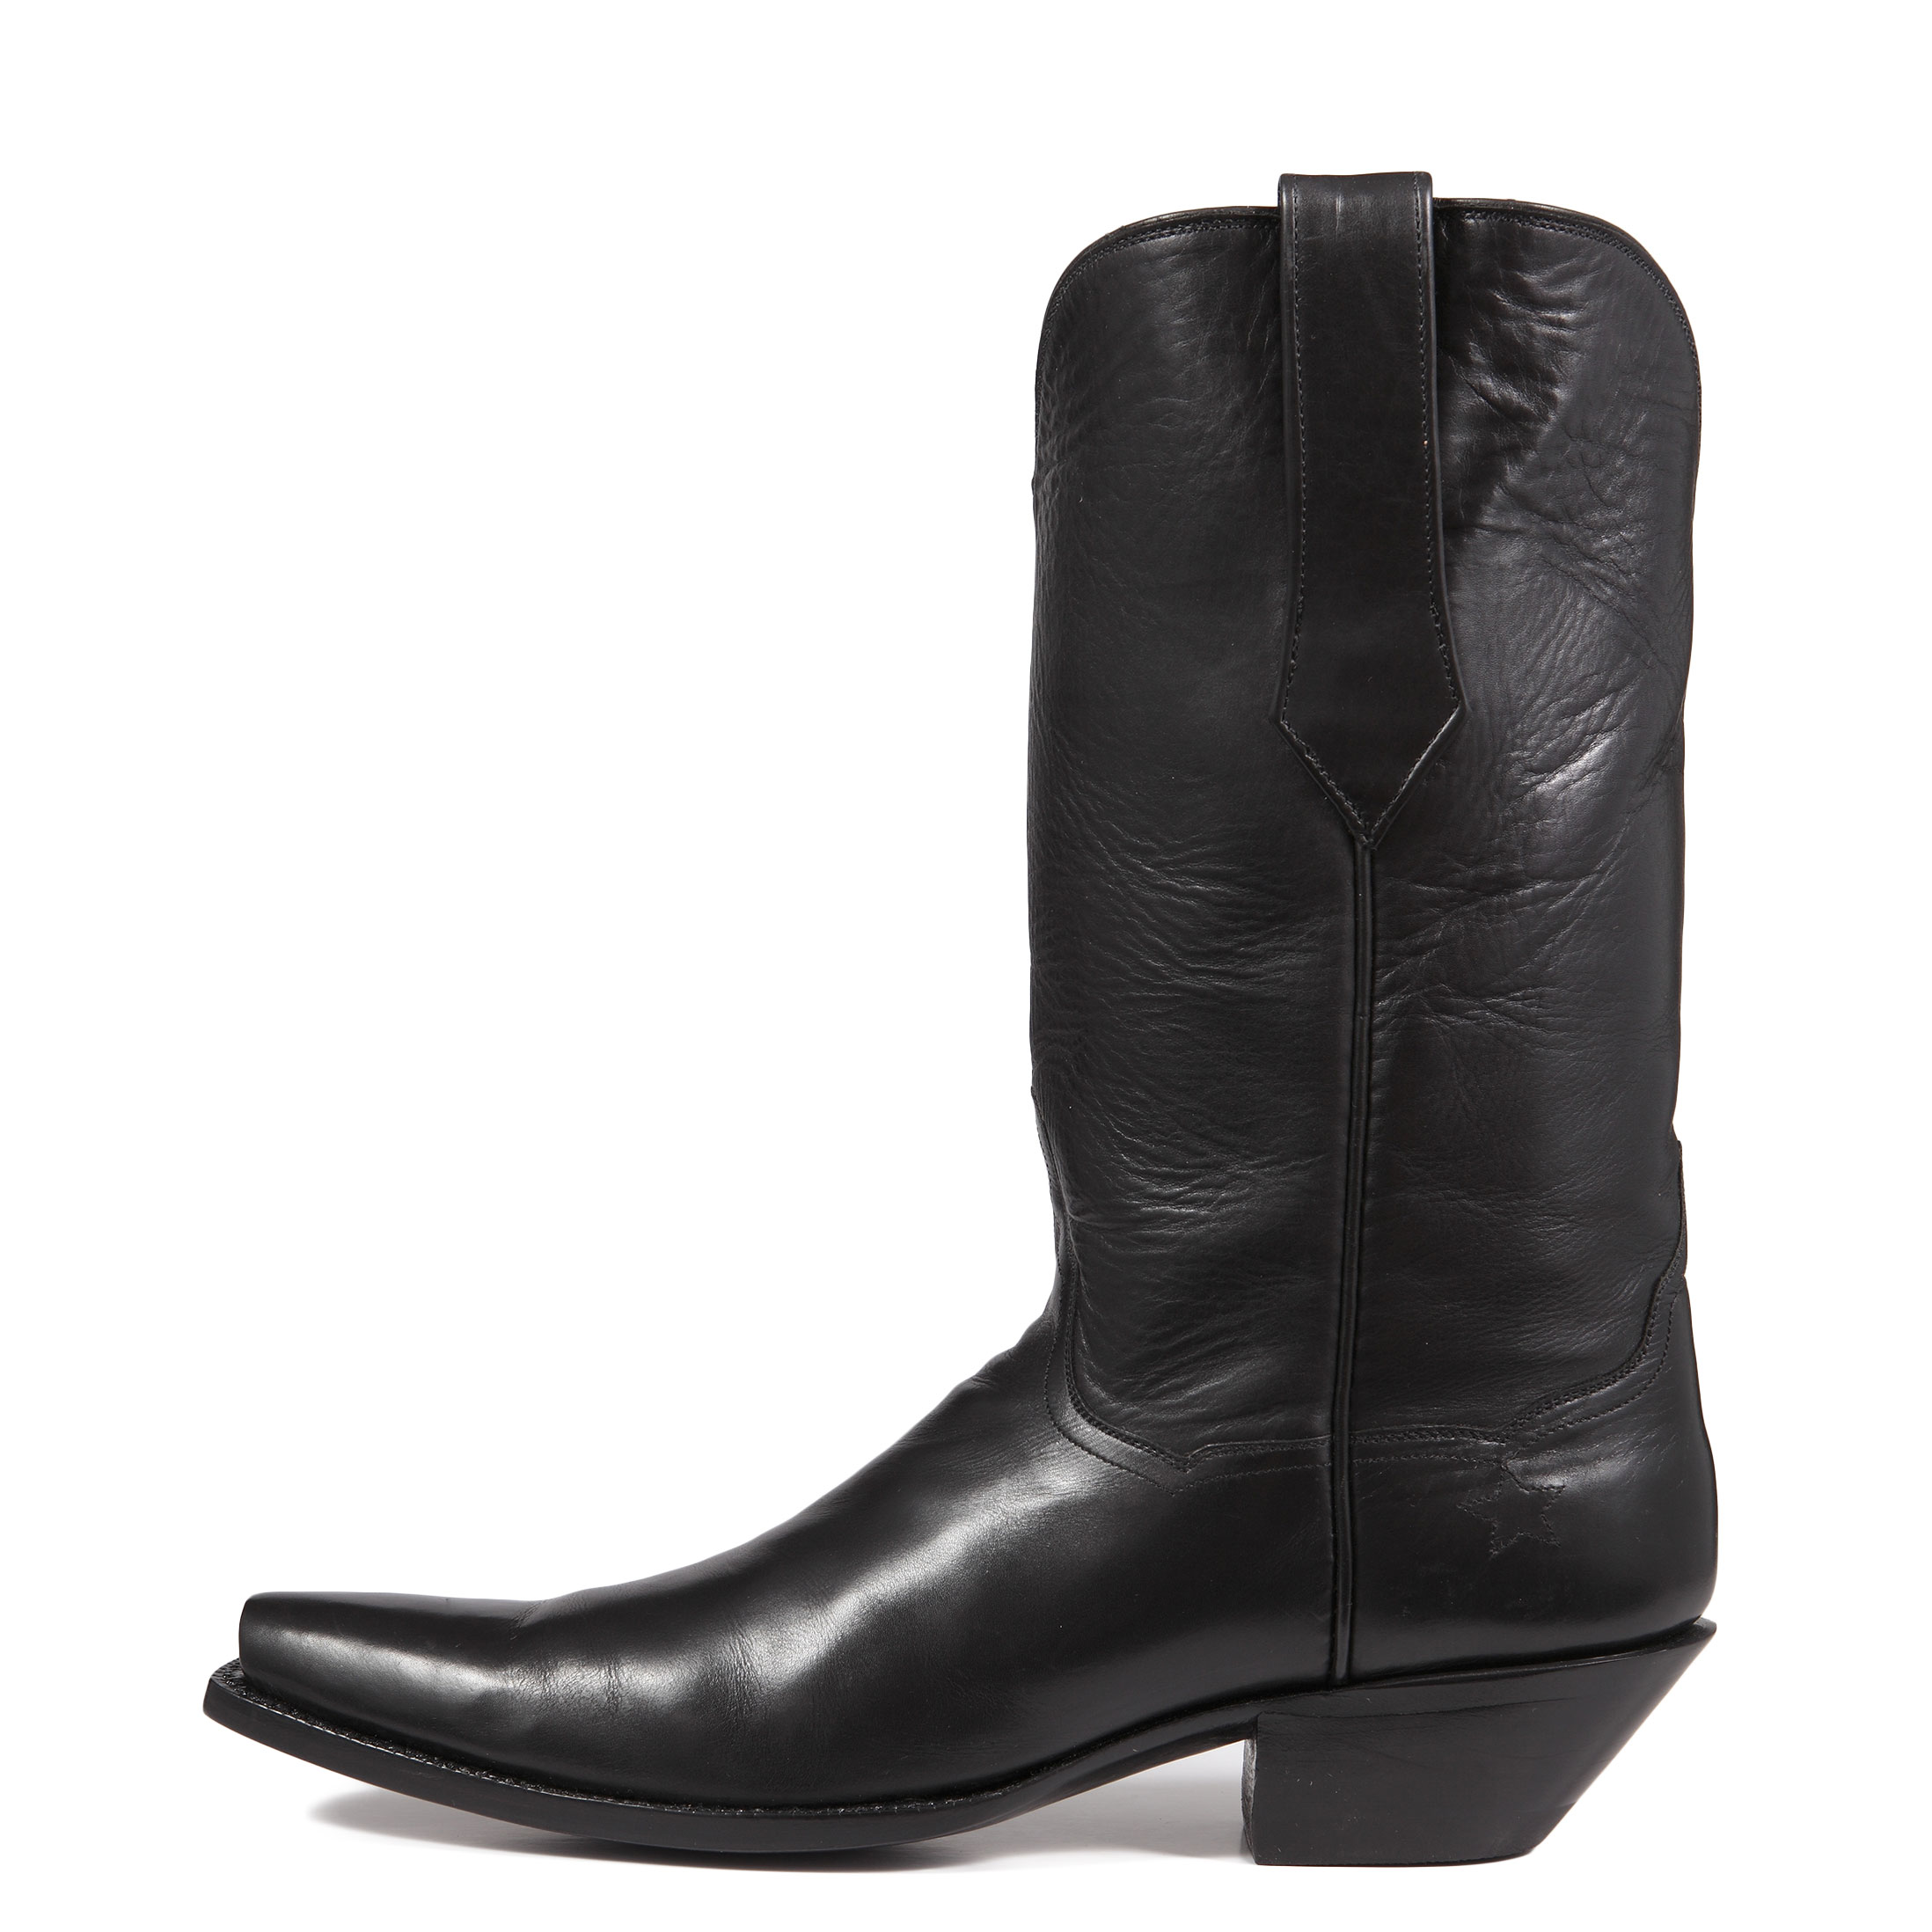 Style #840 - J.B. Hill Boot Company | J.B. Hill Boot Company